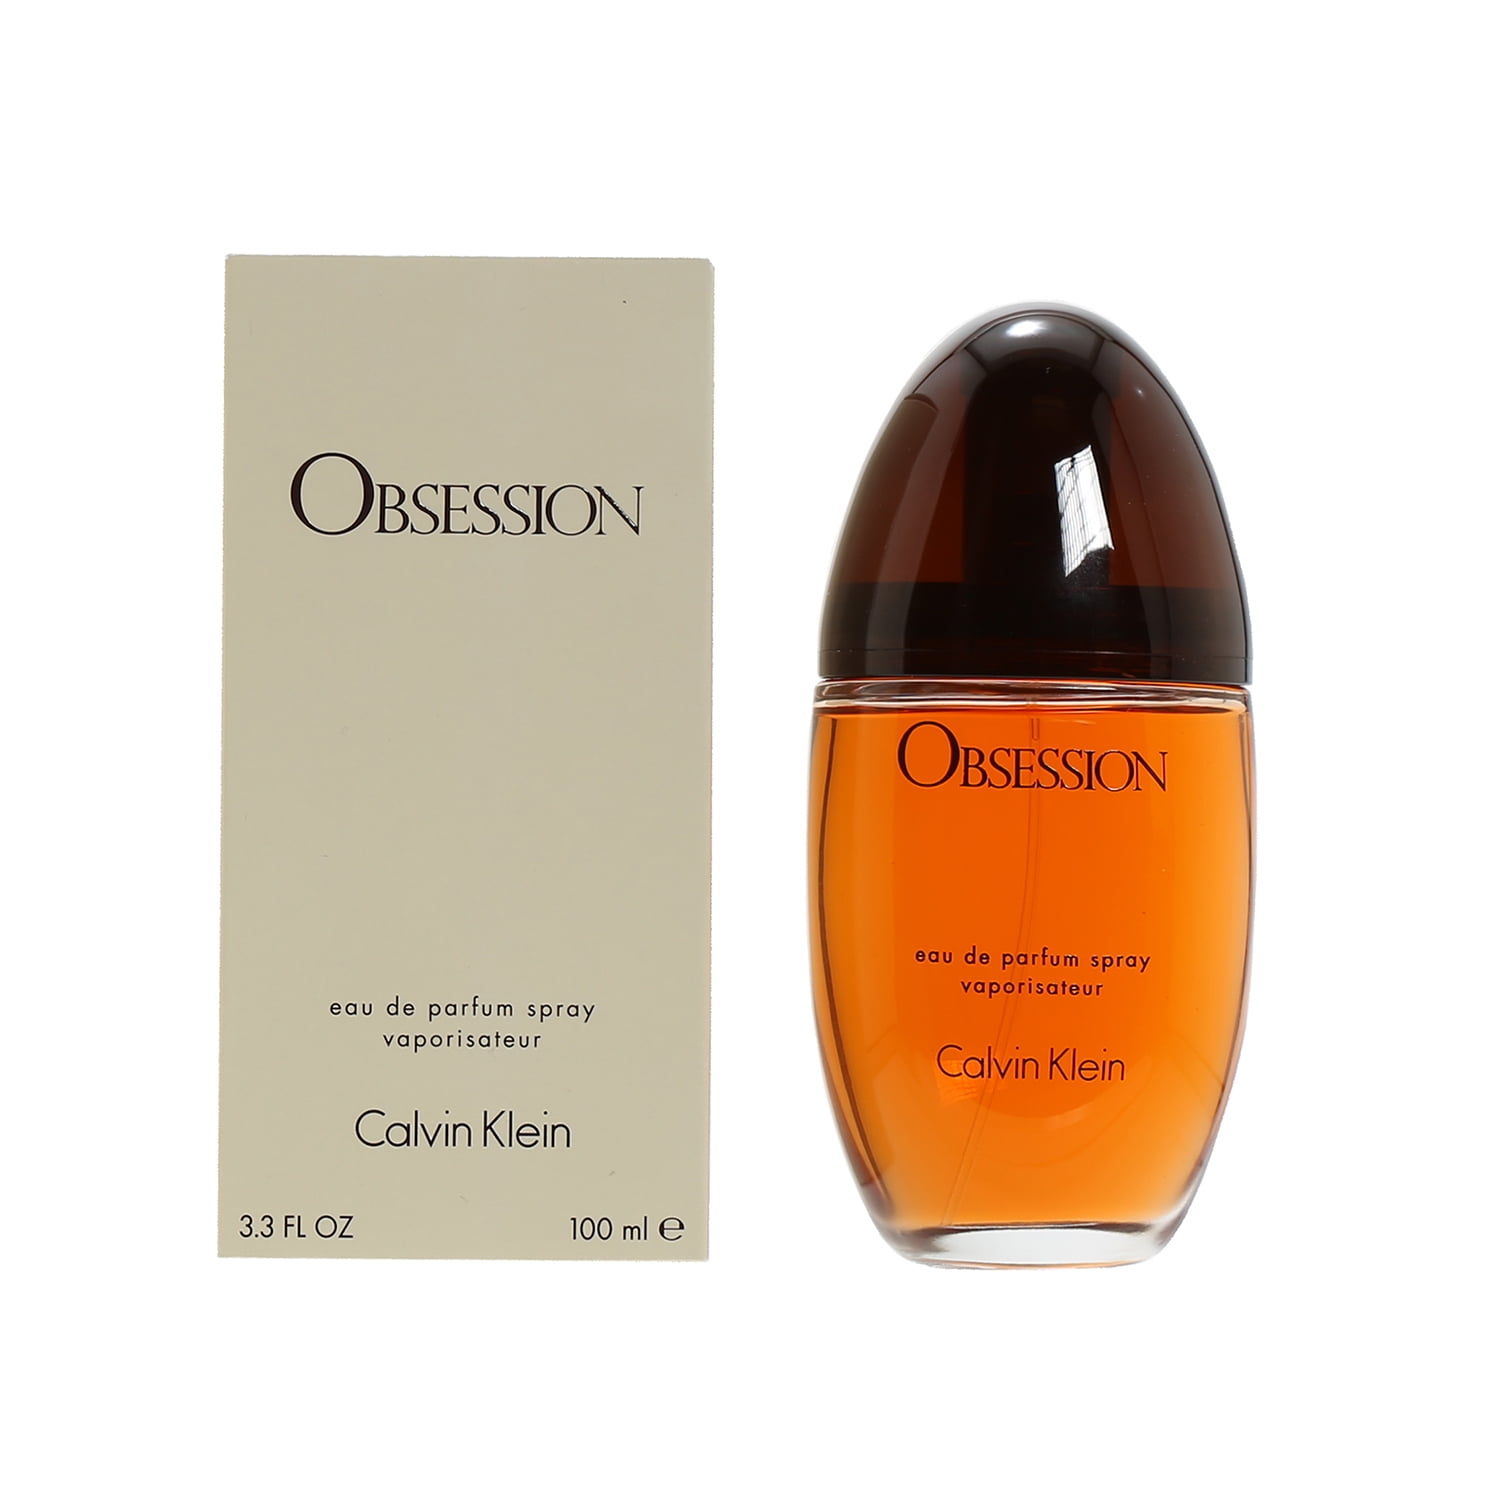 Calvin Klein Obsession Eau de Parfum, Perfume for Women,  Oz -  